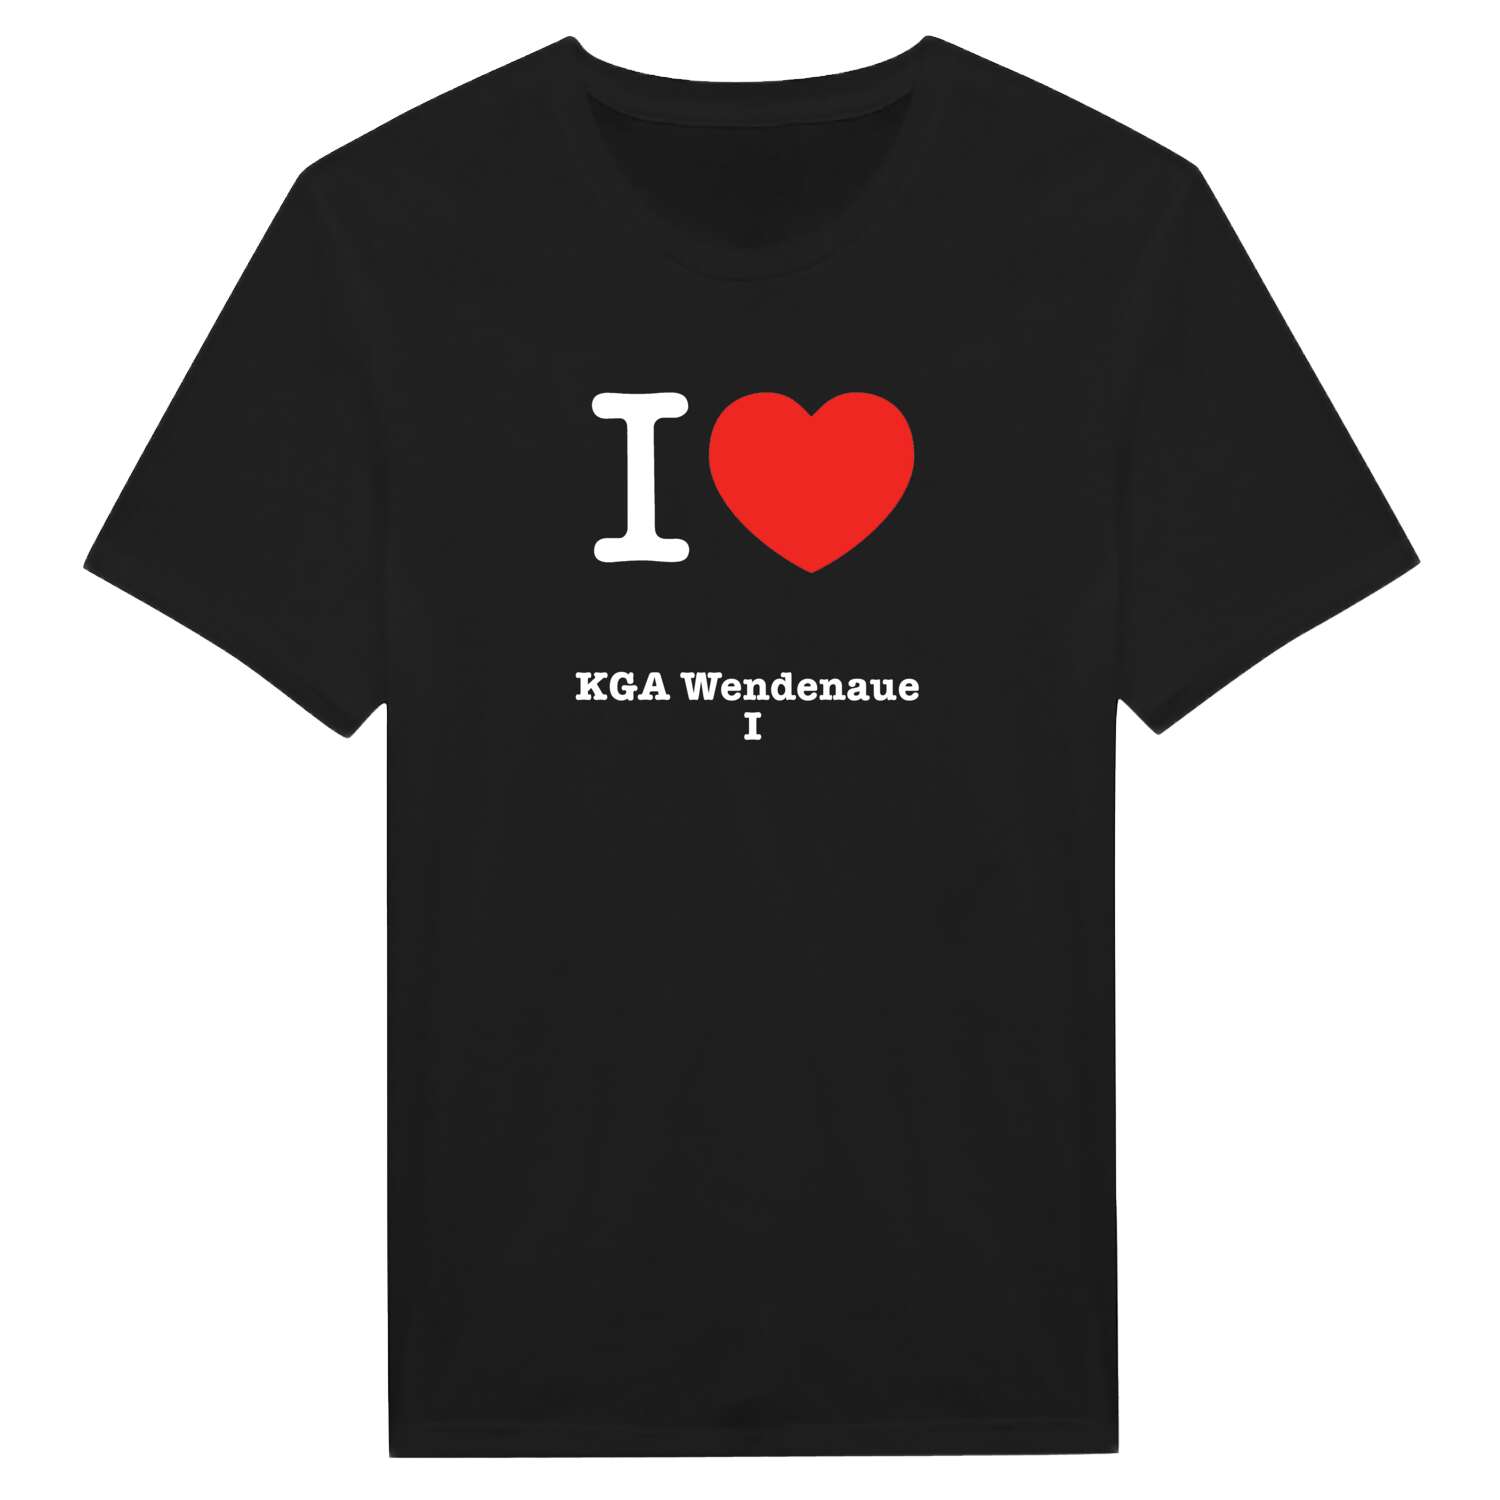 KGA Wendenaue I T-Shirt »I love«